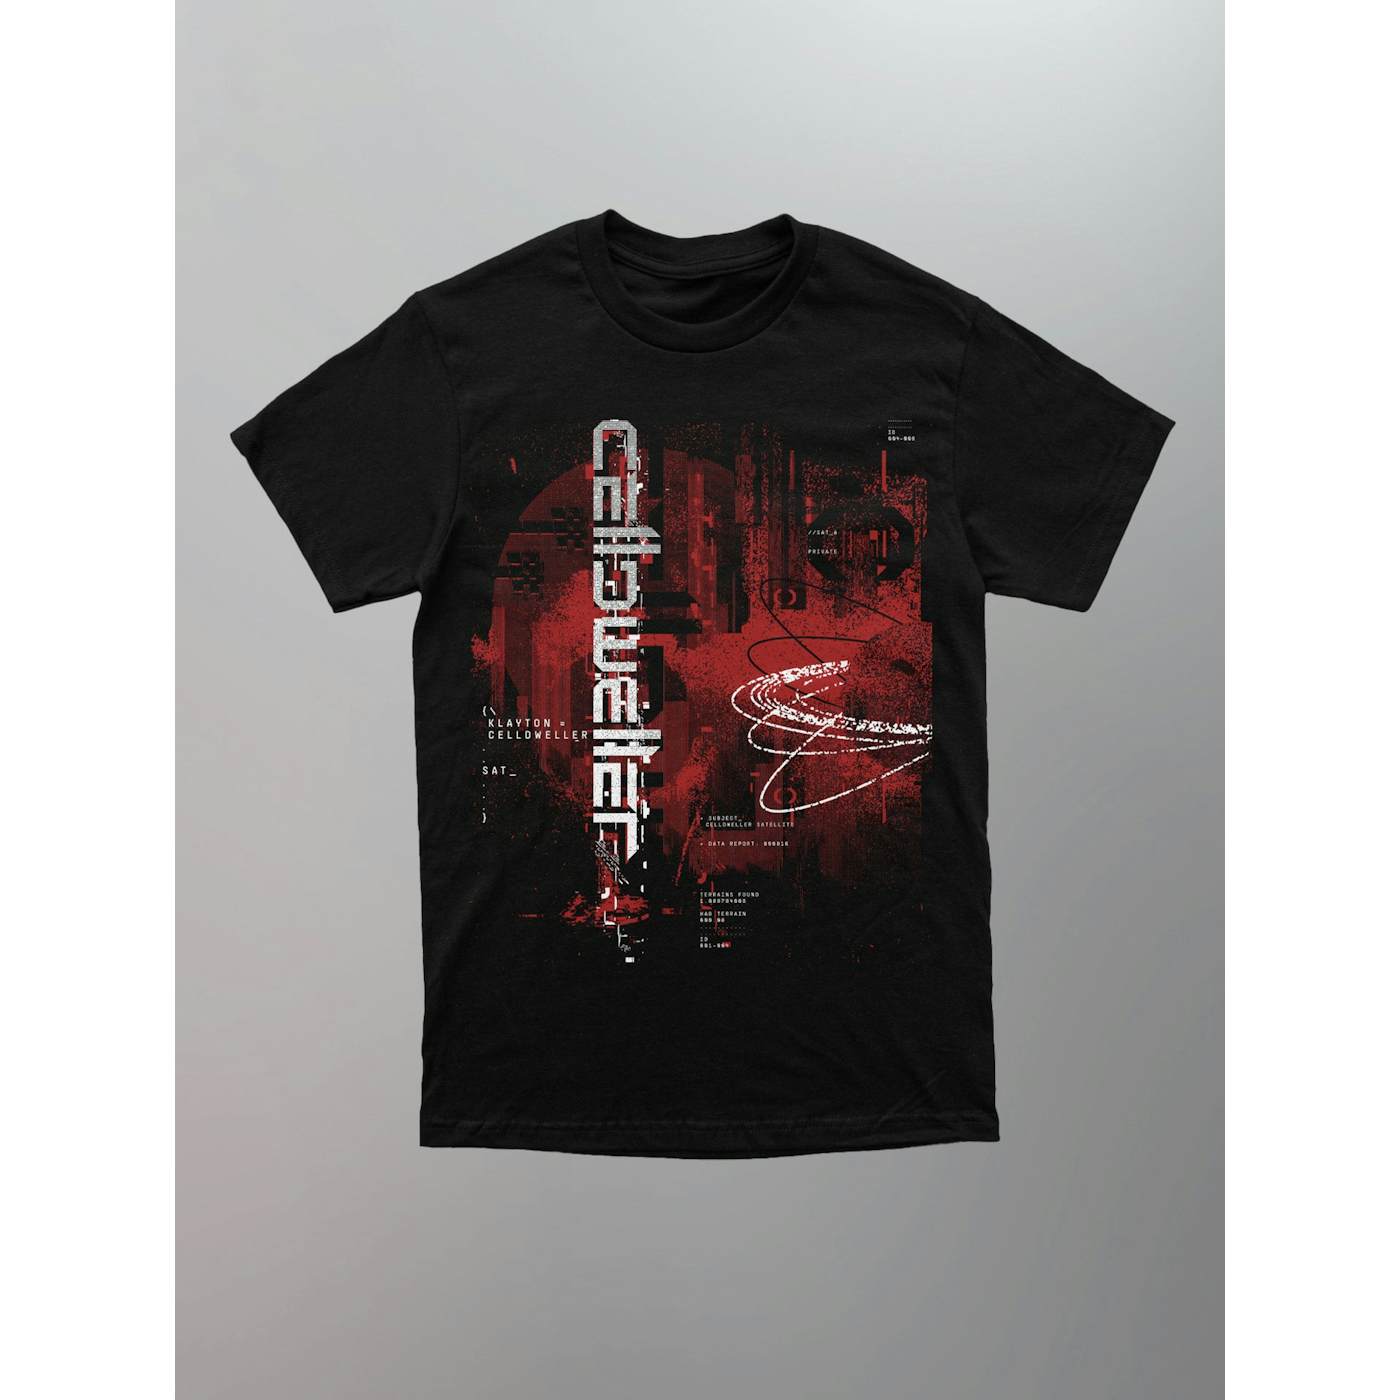 Celldweller - Satellites TEK Shirt